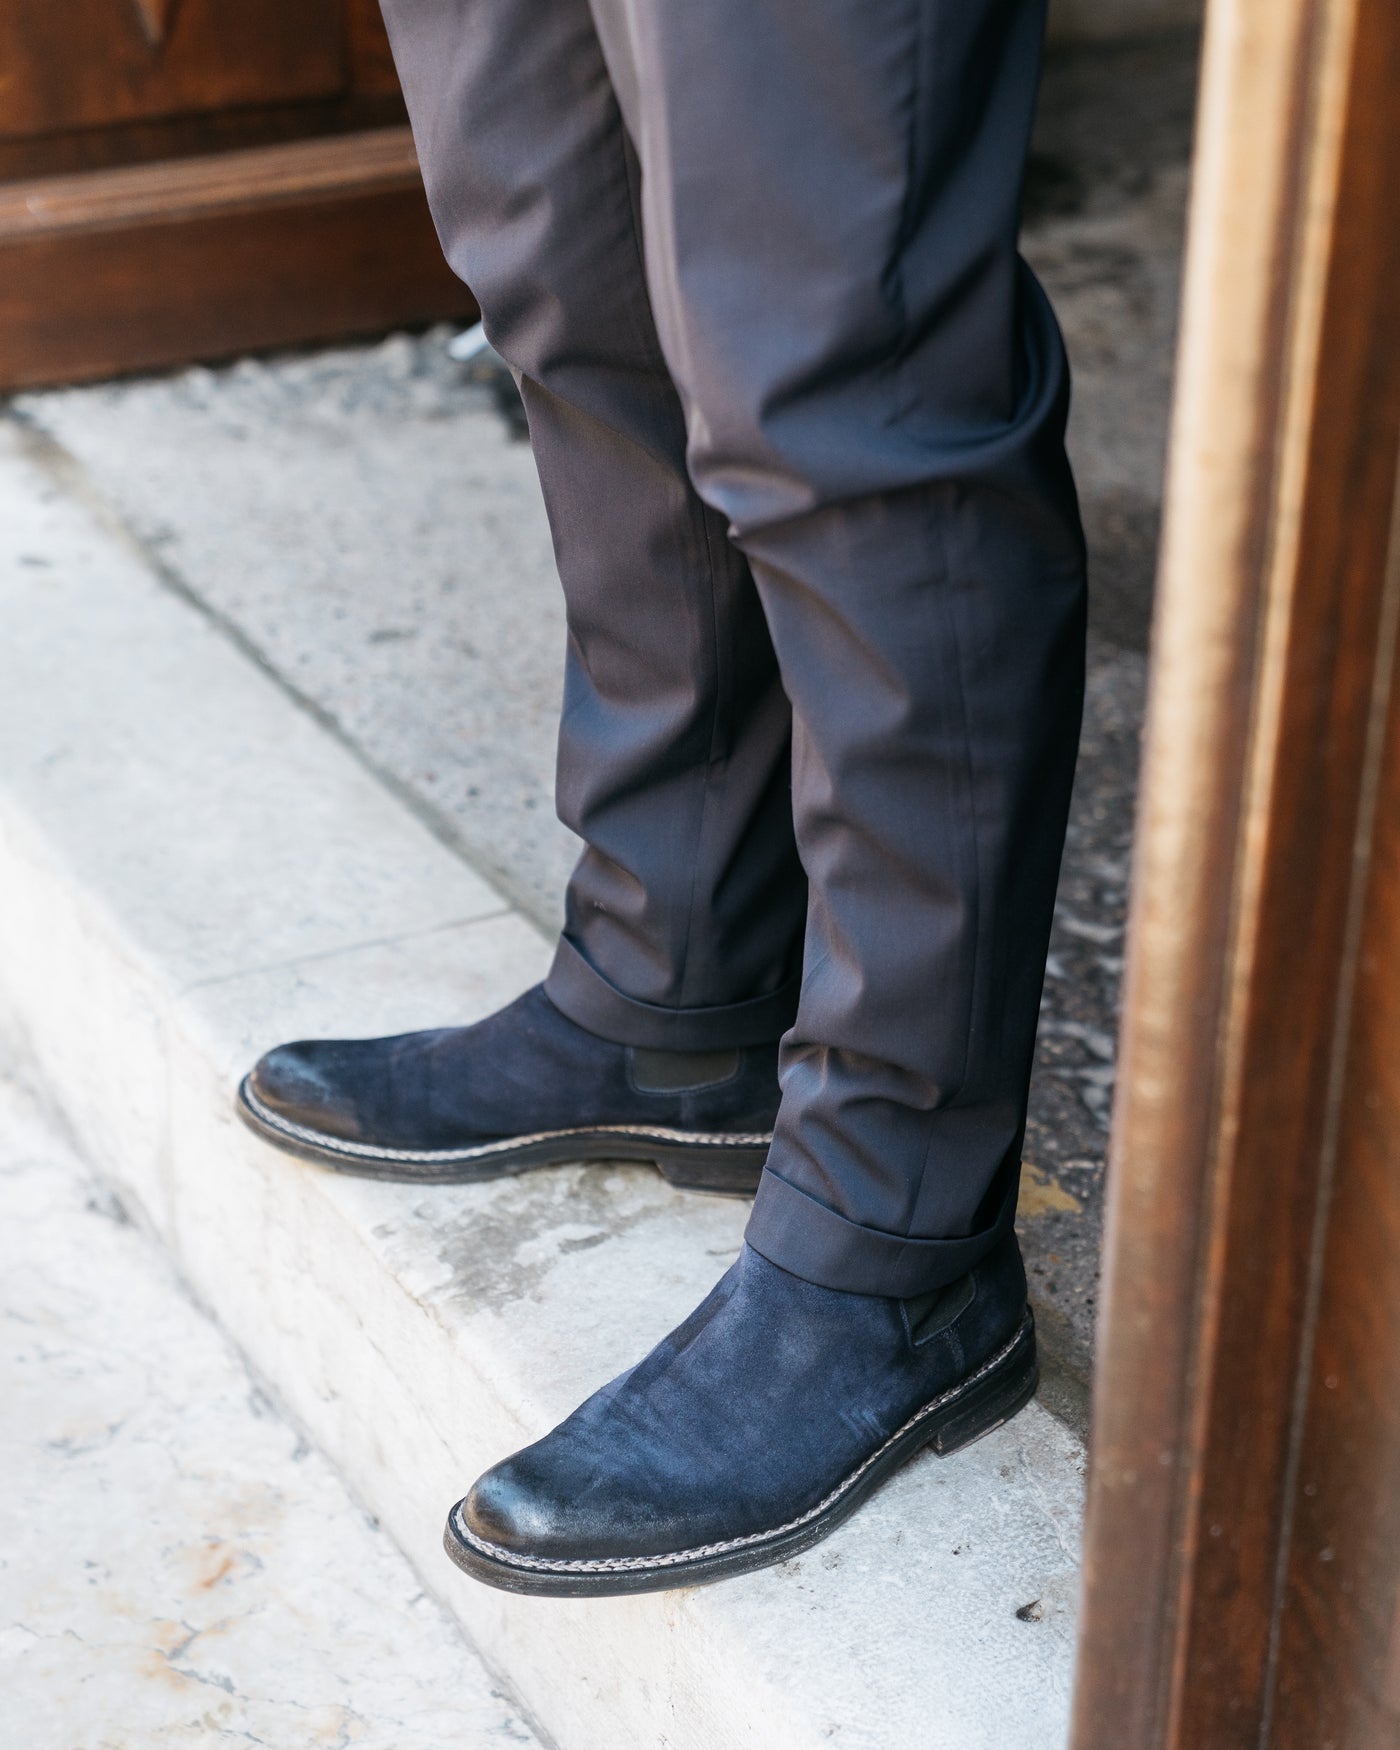 Lapo Chelsea reversed suede Leather Shoes  (dark blue)